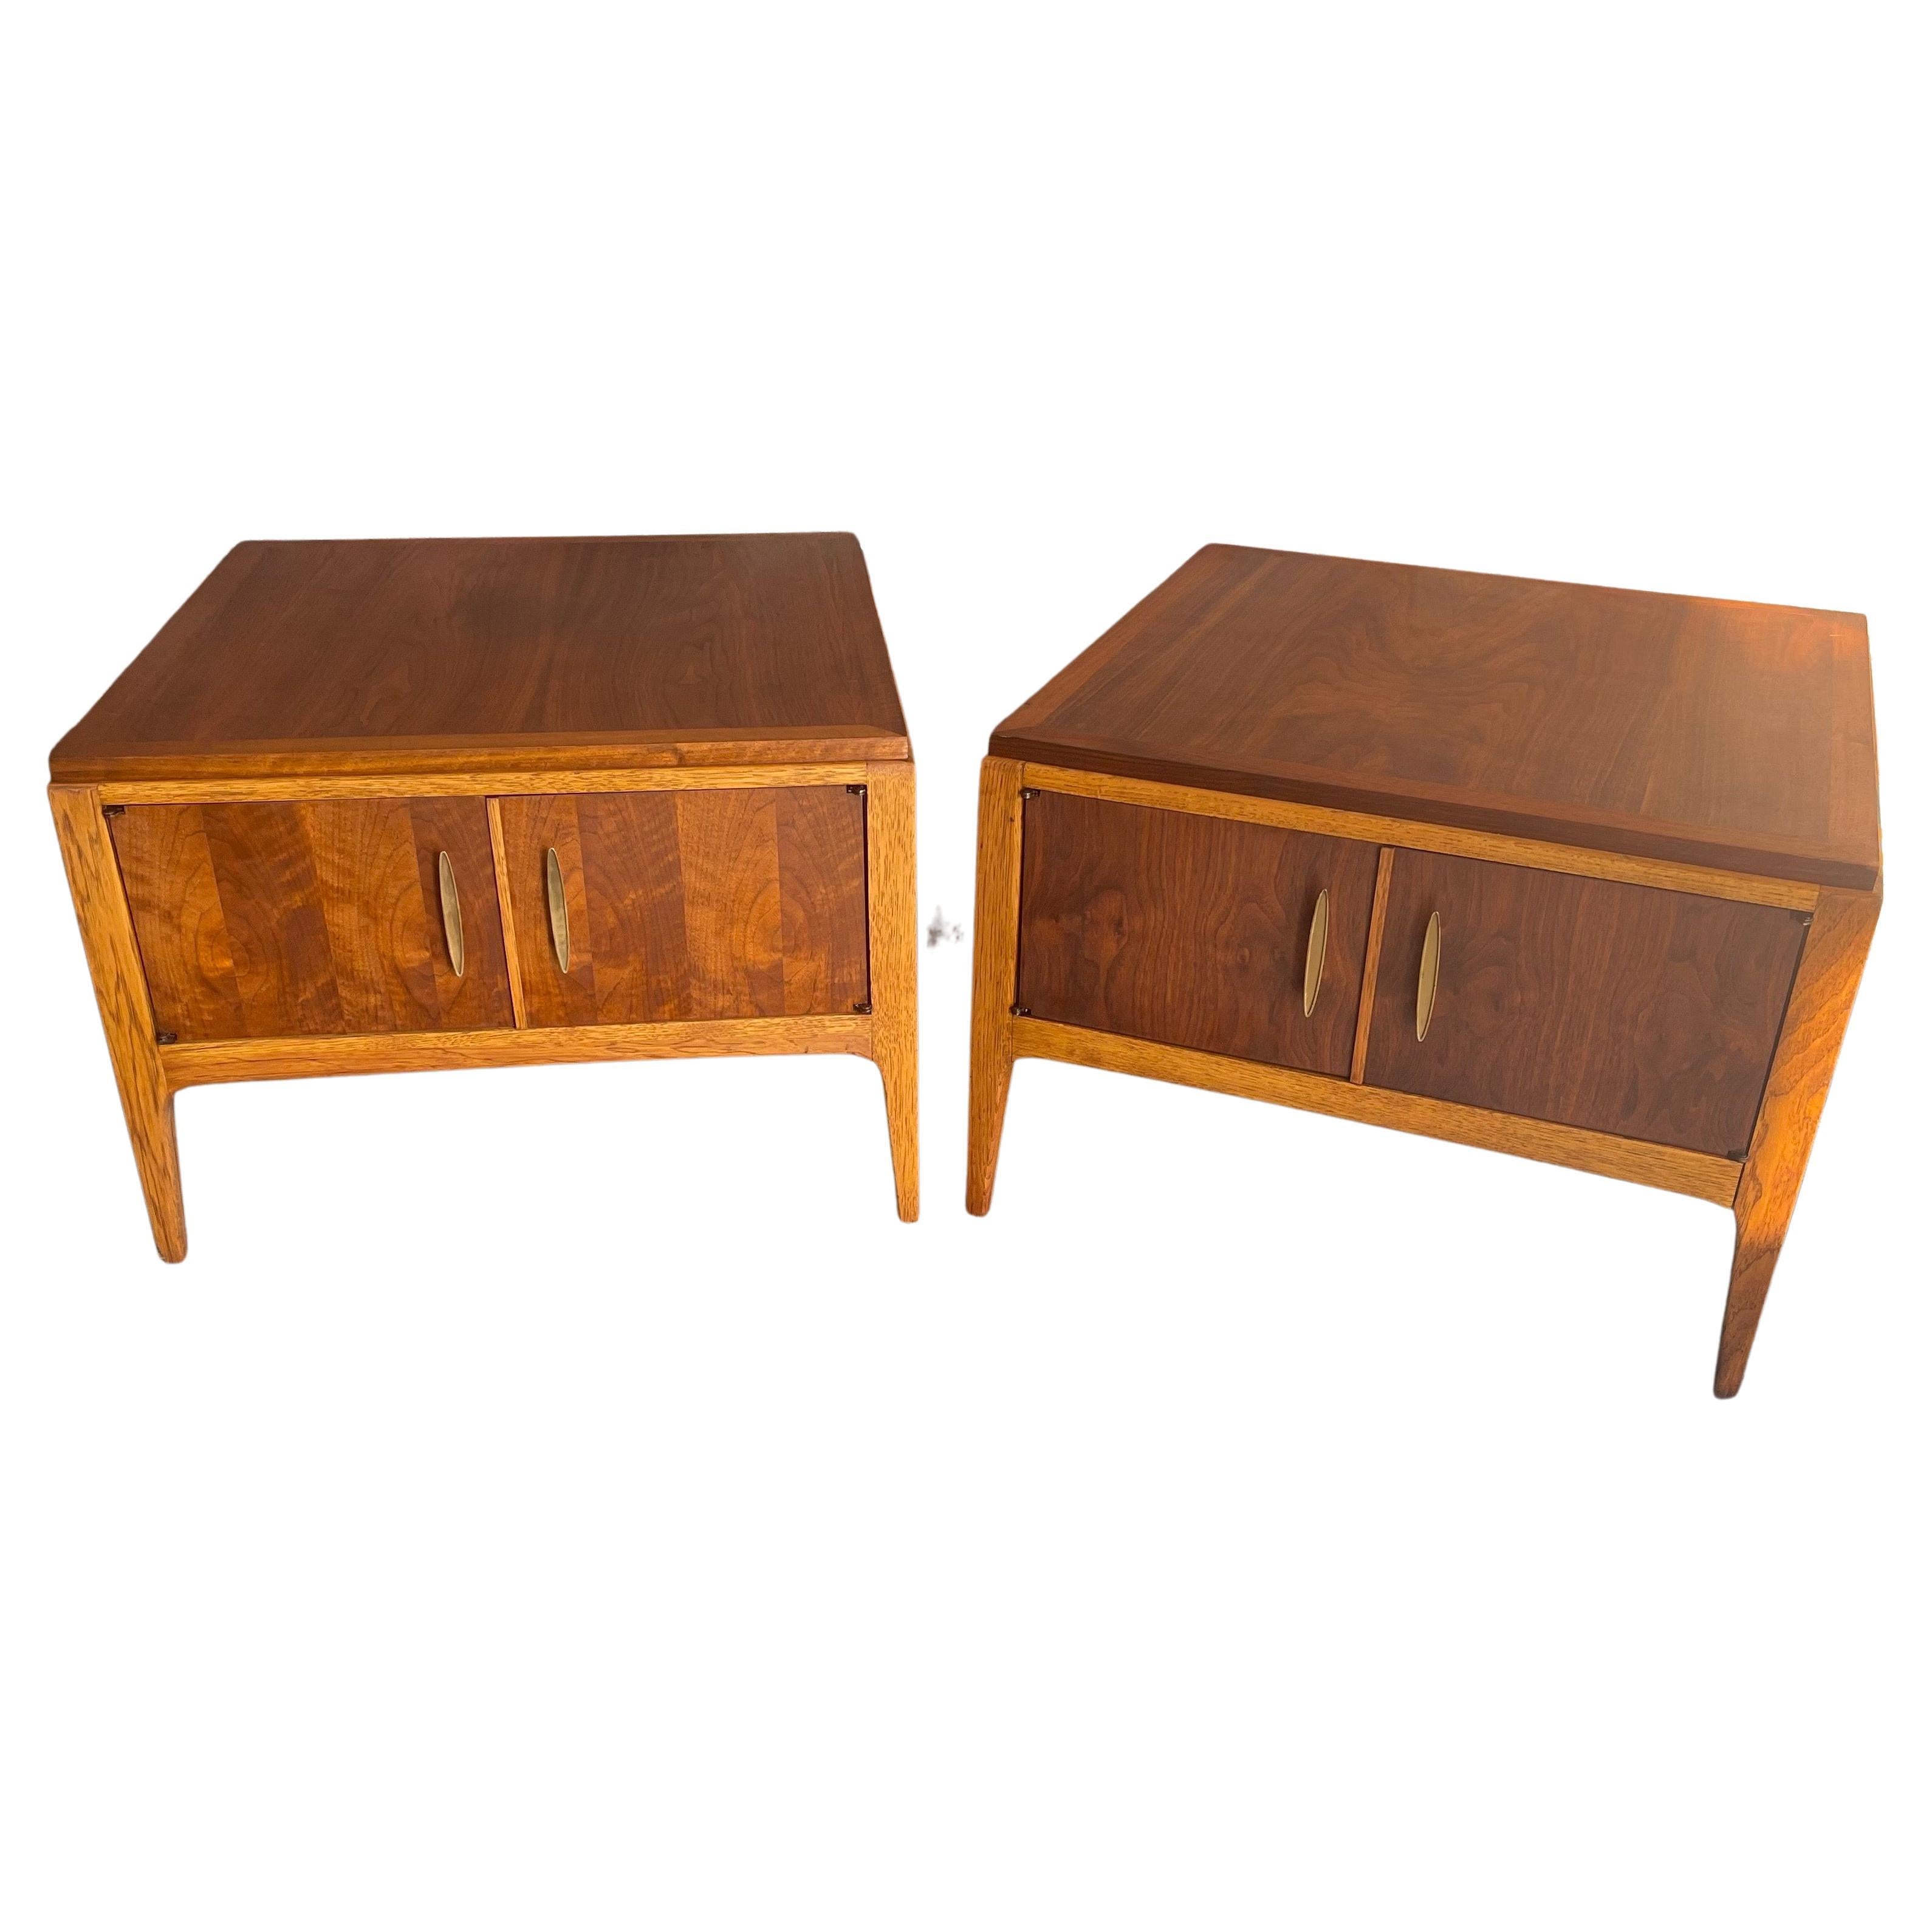 Pair of MCM Walnut "Rhythm" Series End Tables by Paul McCobb for Lane Furniture